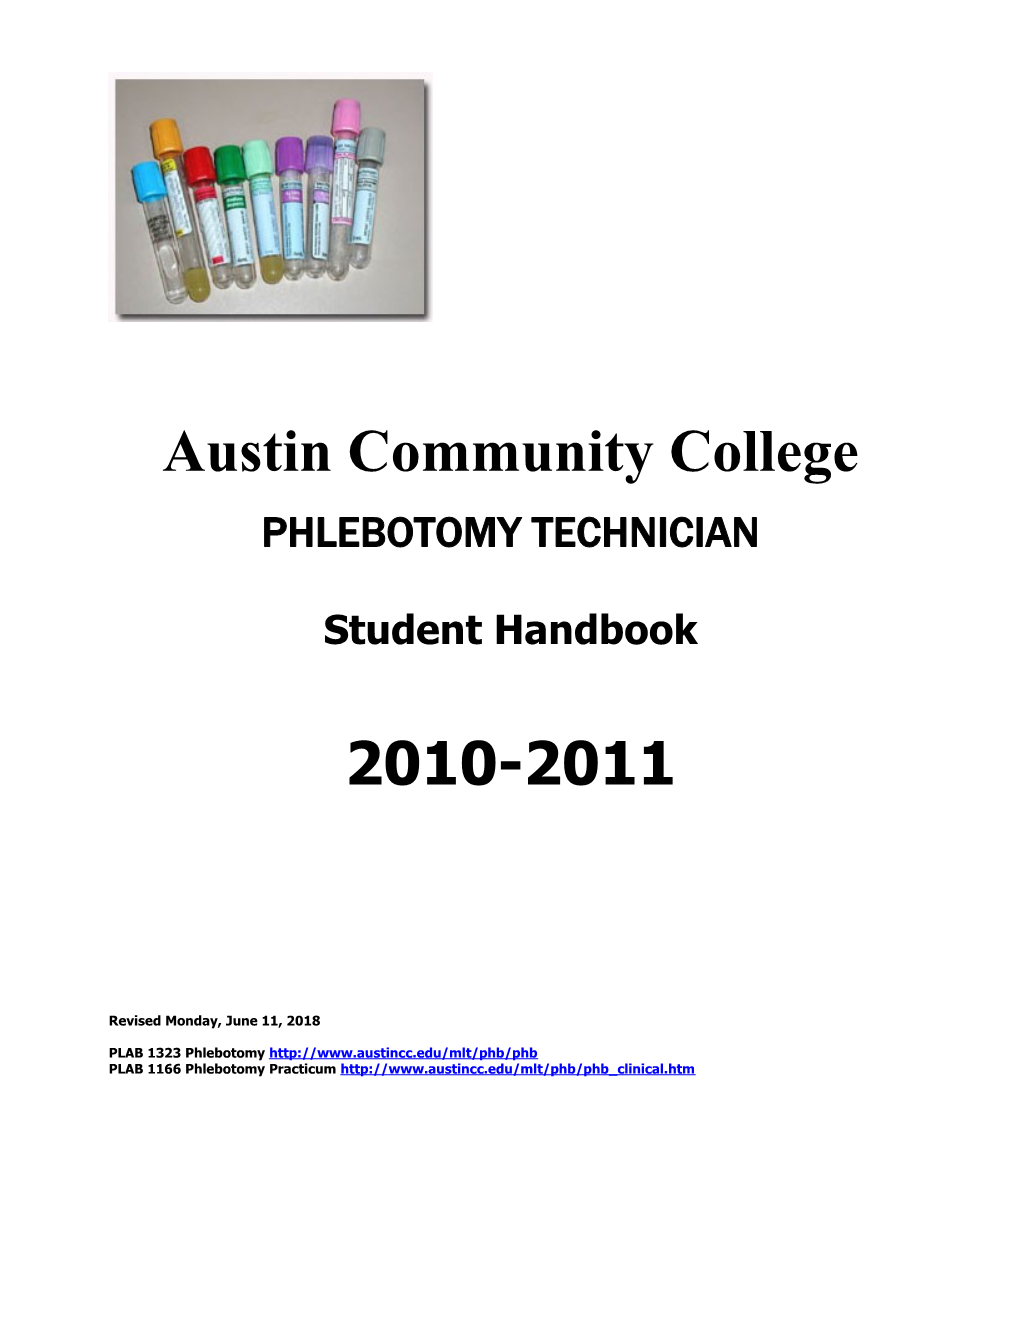 Austin Community College s2